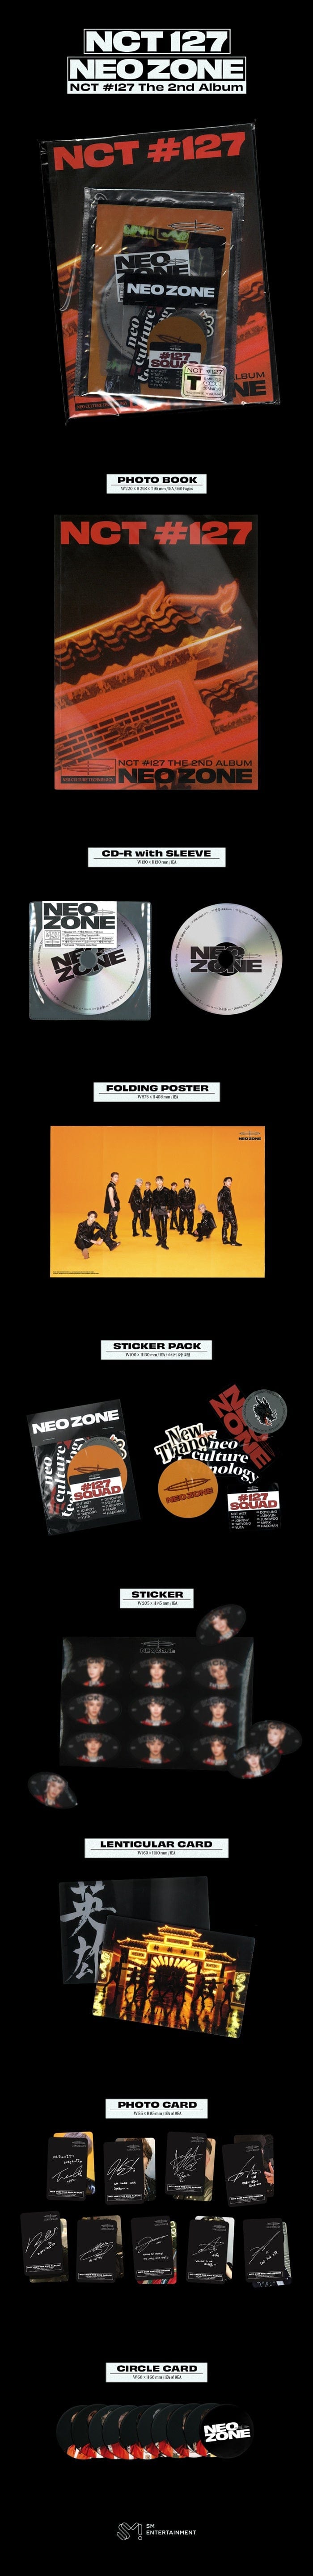 Korea Pop Store NCT 127 - VOL.2 [NCT #127 Neo Zone] (T VER.) Kawaii Gifts